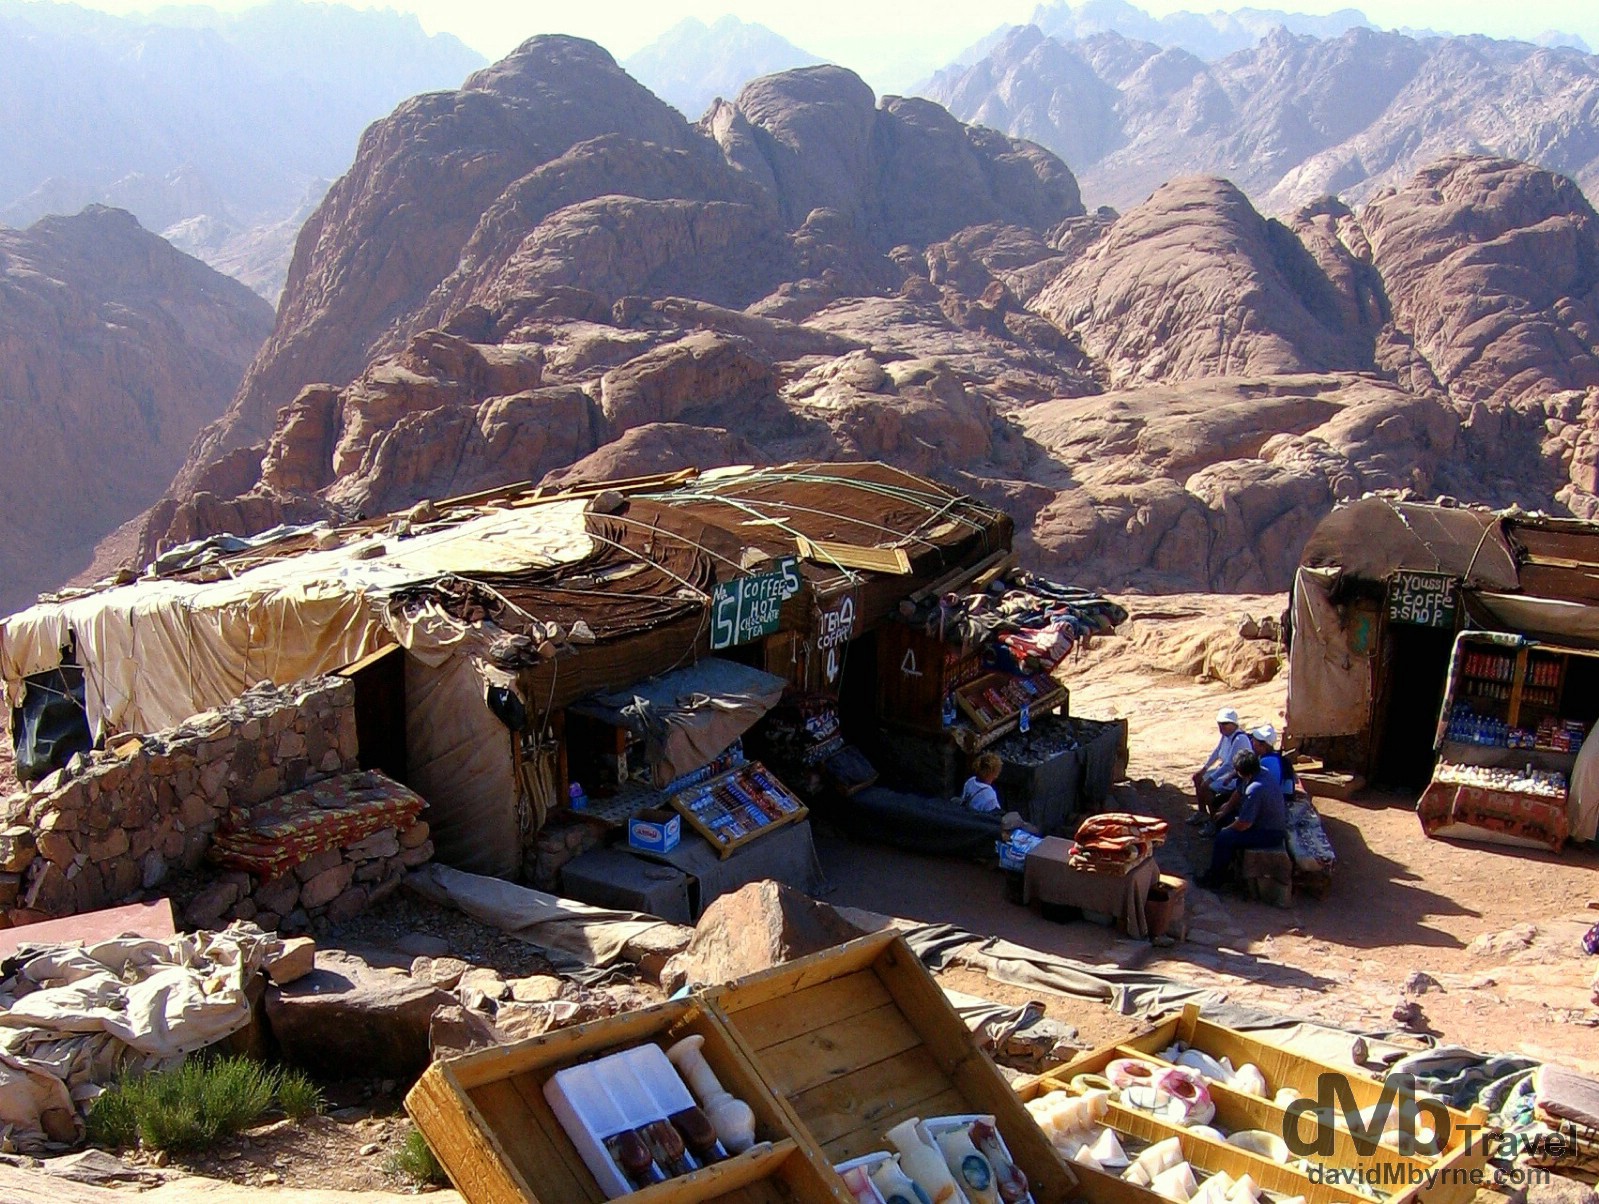 The summit of Mt. Sinai, Sinai Peninsula, Egypt. April 22, 2008.